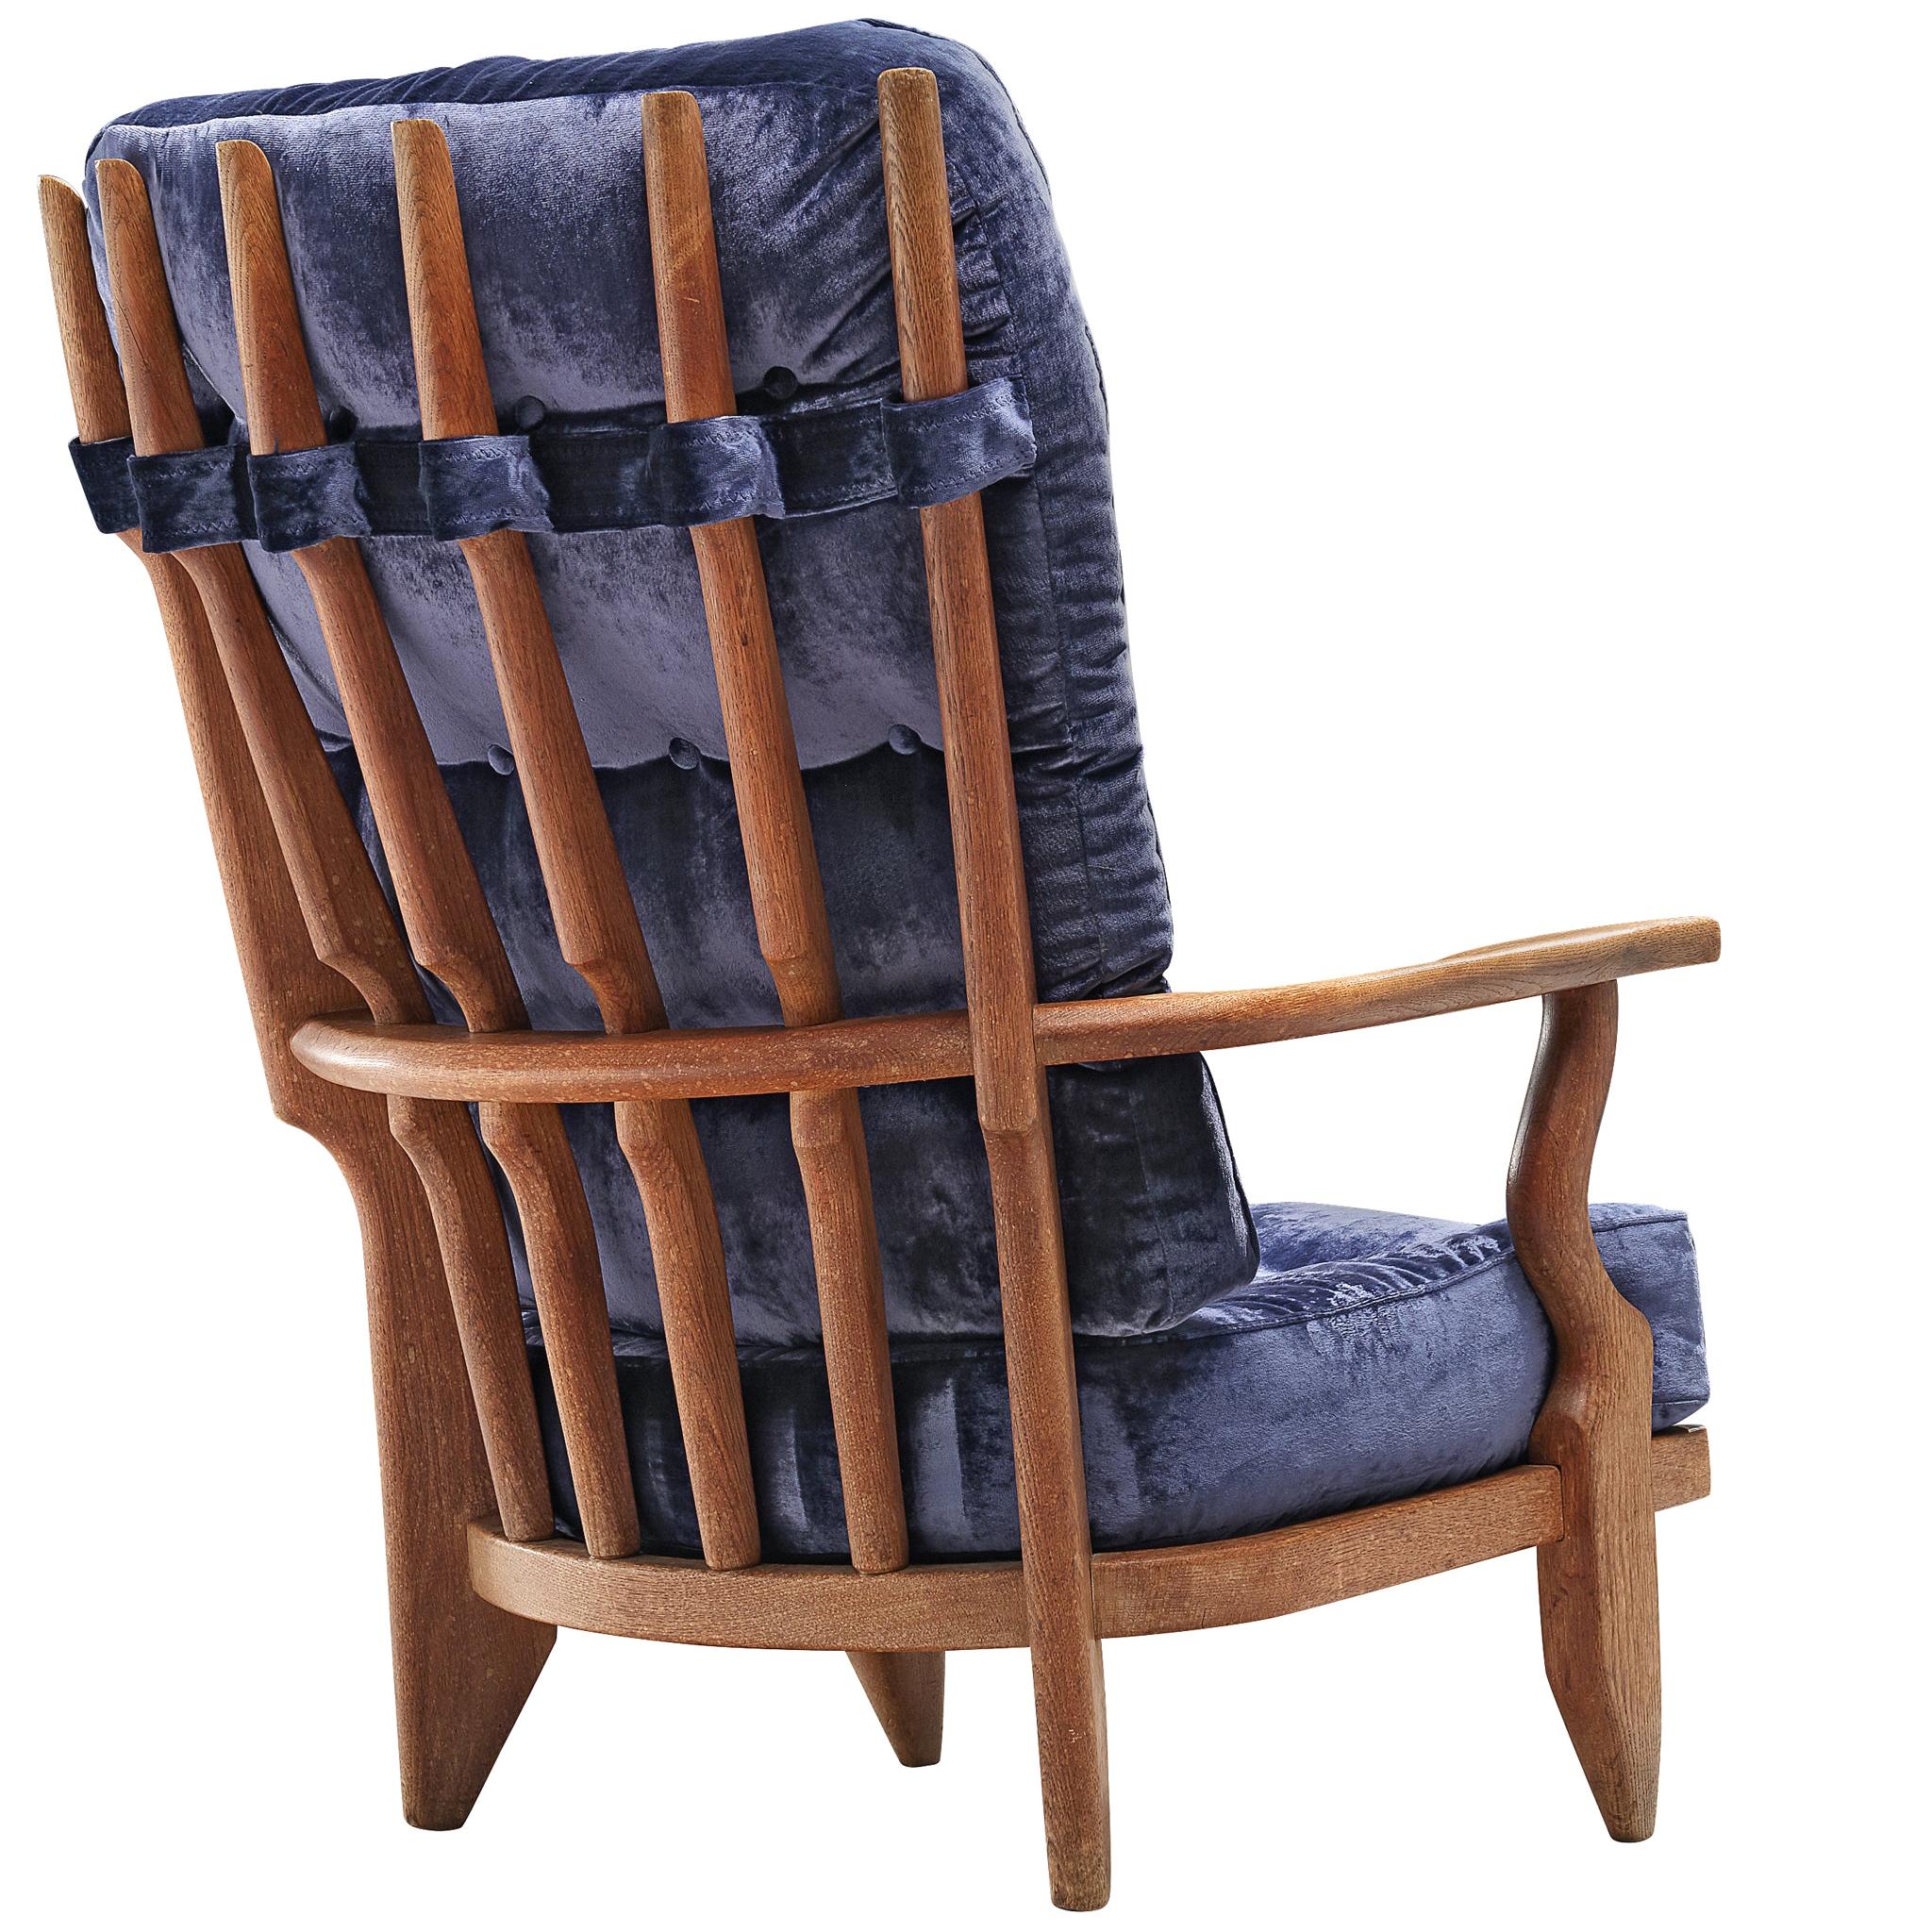 Guillerme & Chambron 'Grand Repos' Lounge Chair in Blue Velvet Upholstery